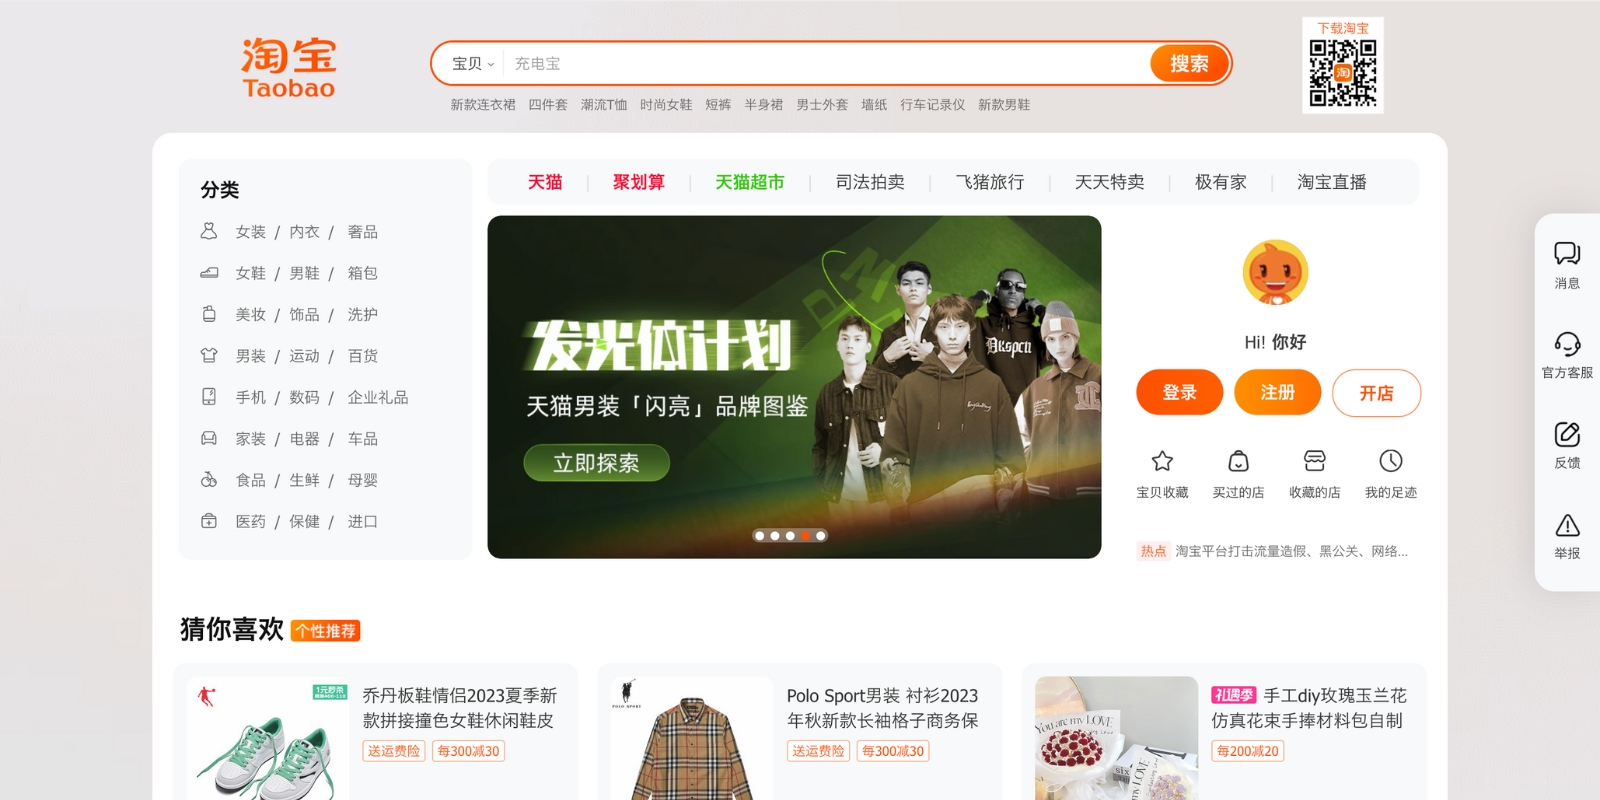 Taobao main web page view